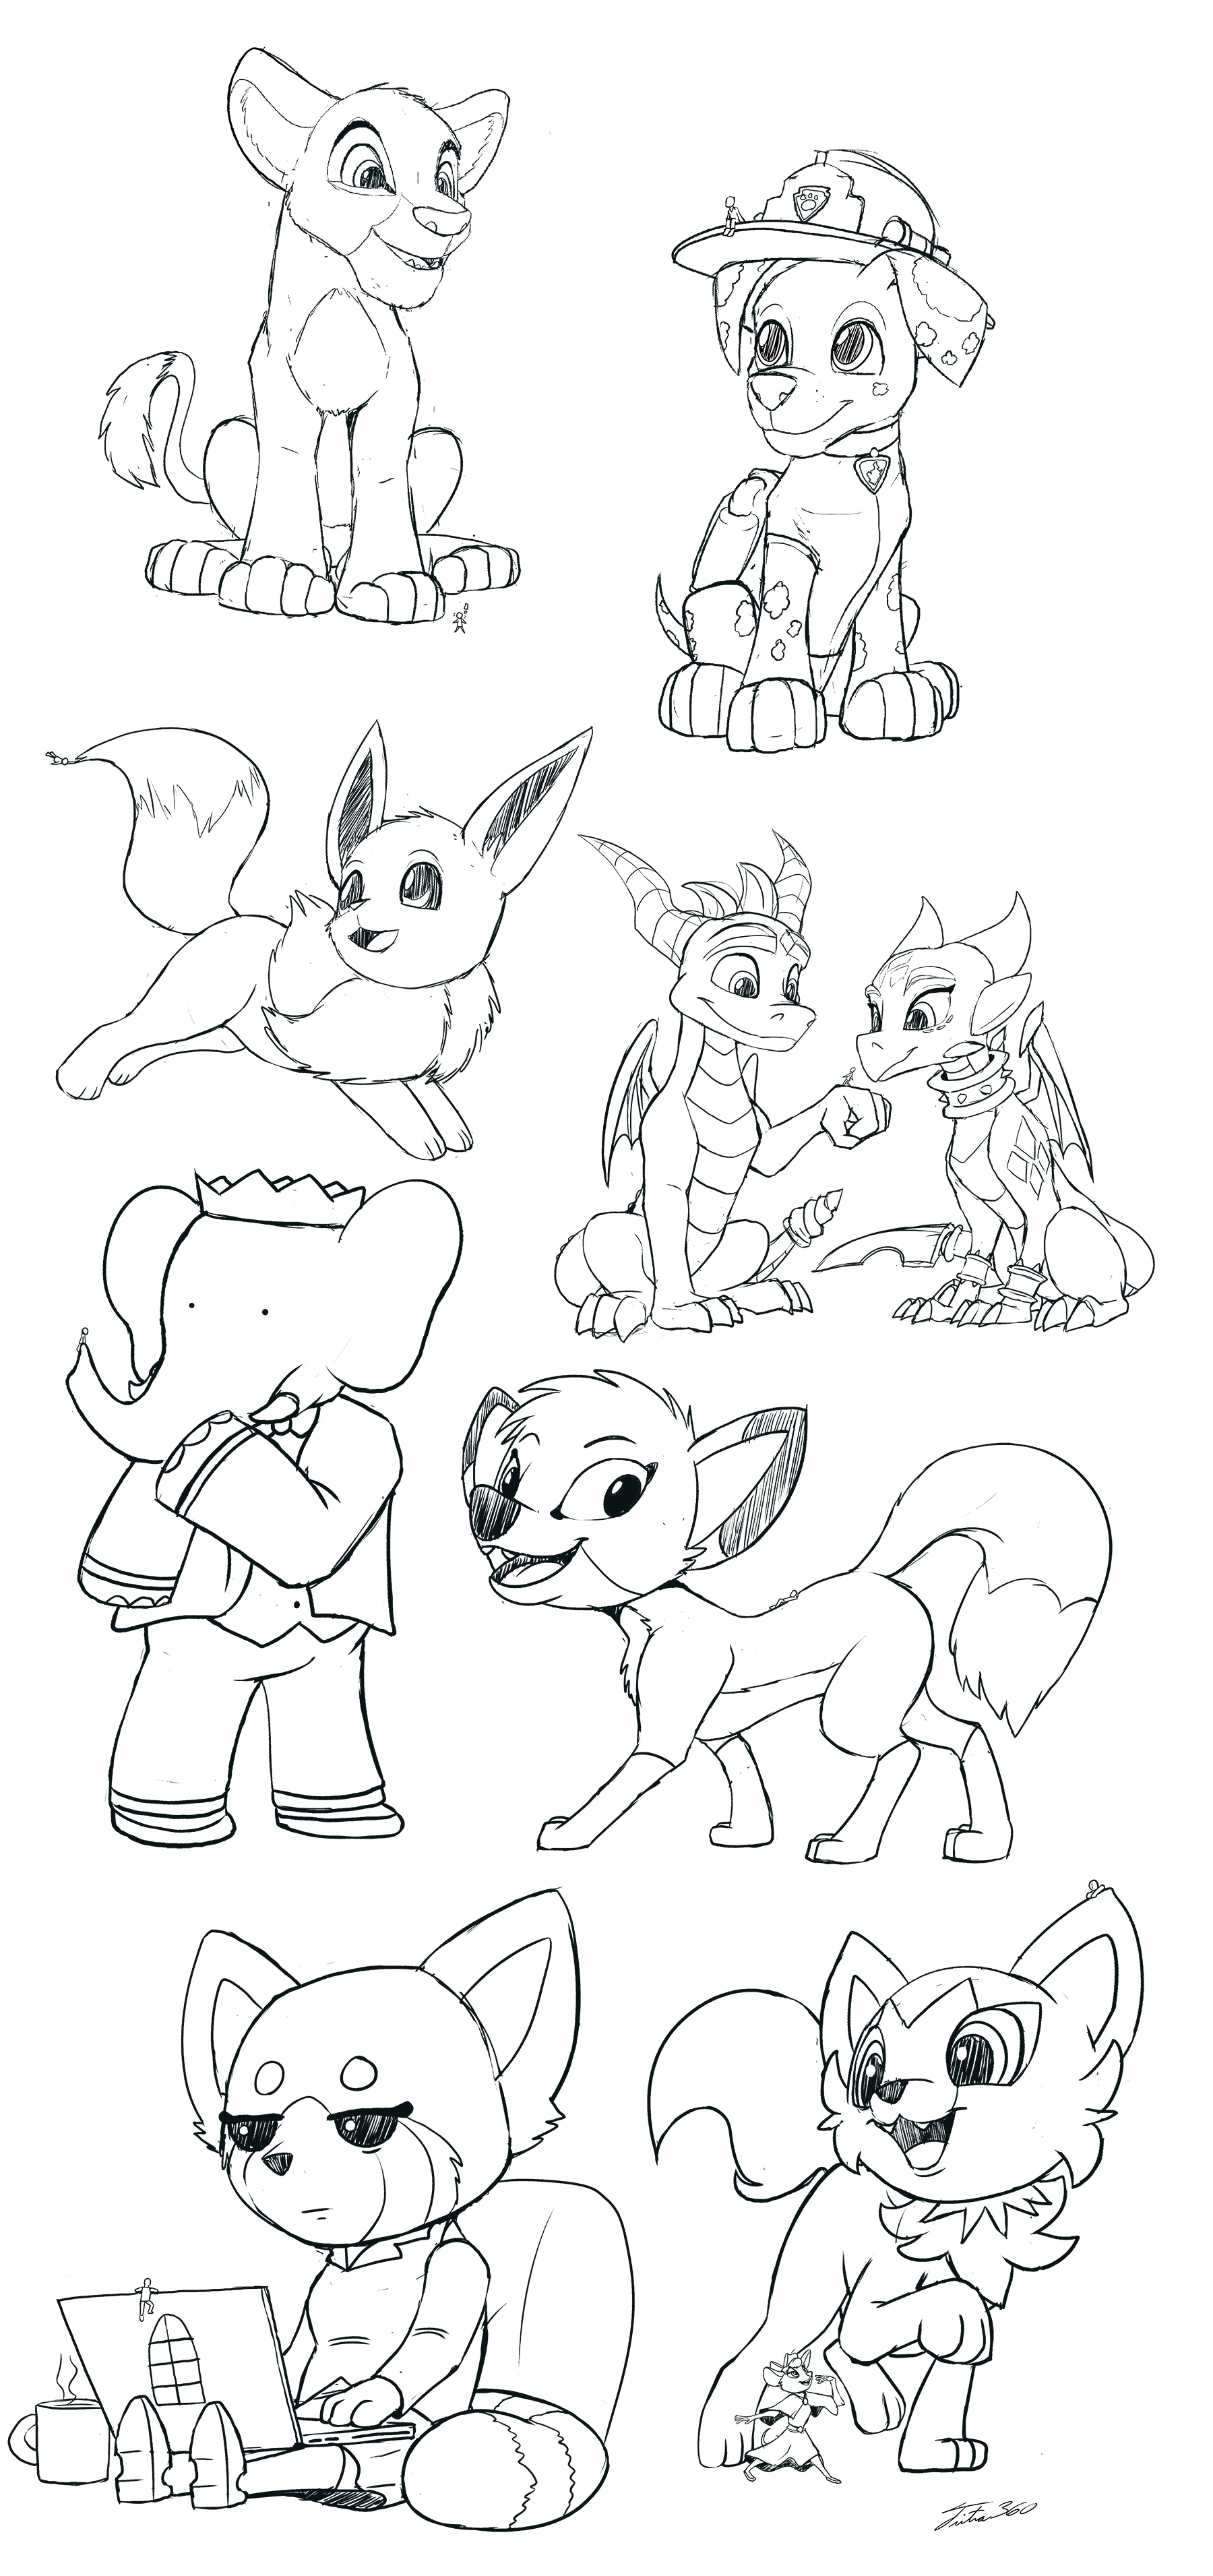 Random Pokemon Doodles - By @coillte on Itaku